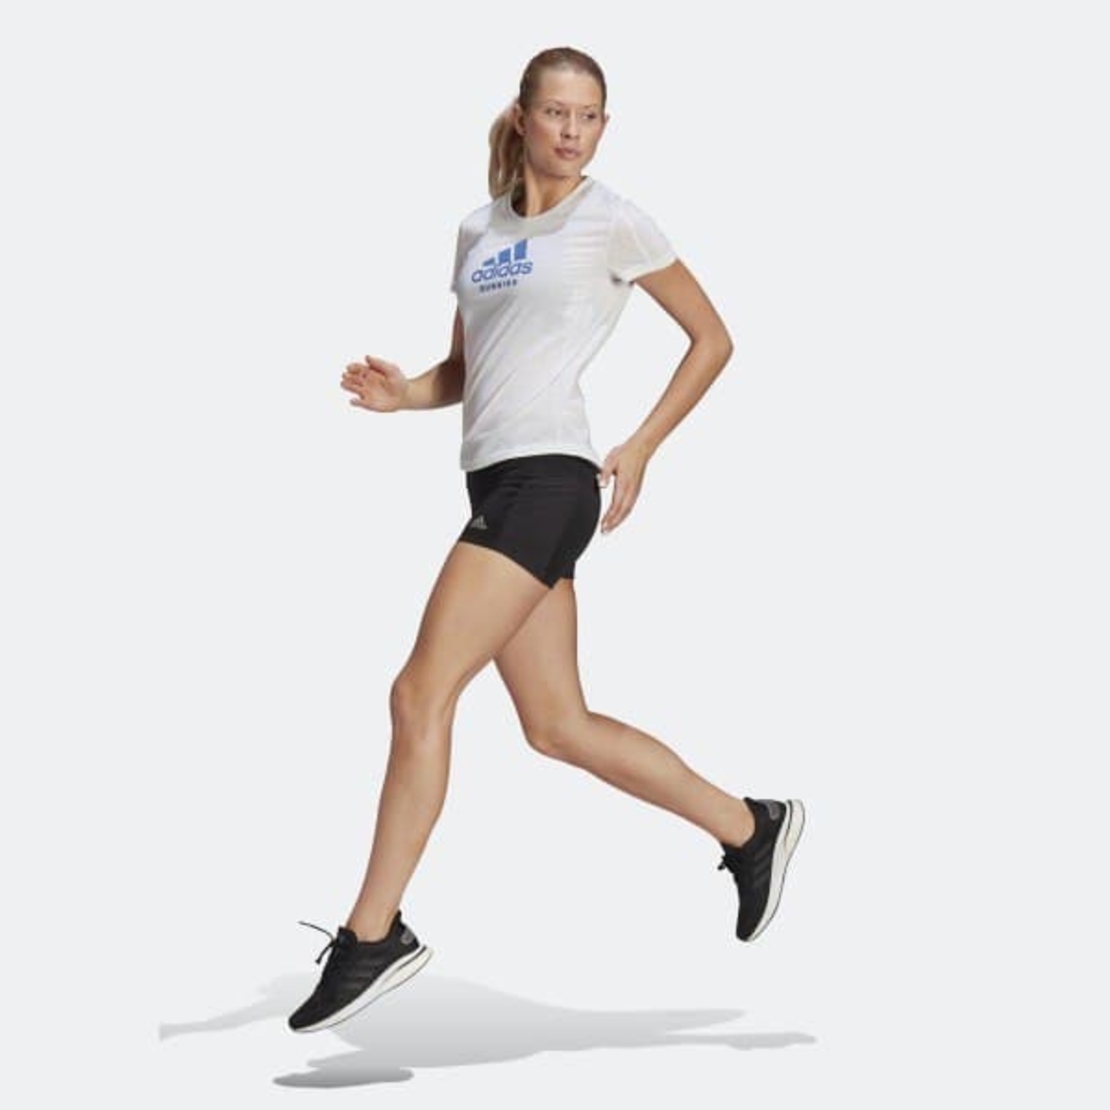 טייץ אדידס קצר לנשים | Adidas Own The Run Short Tights